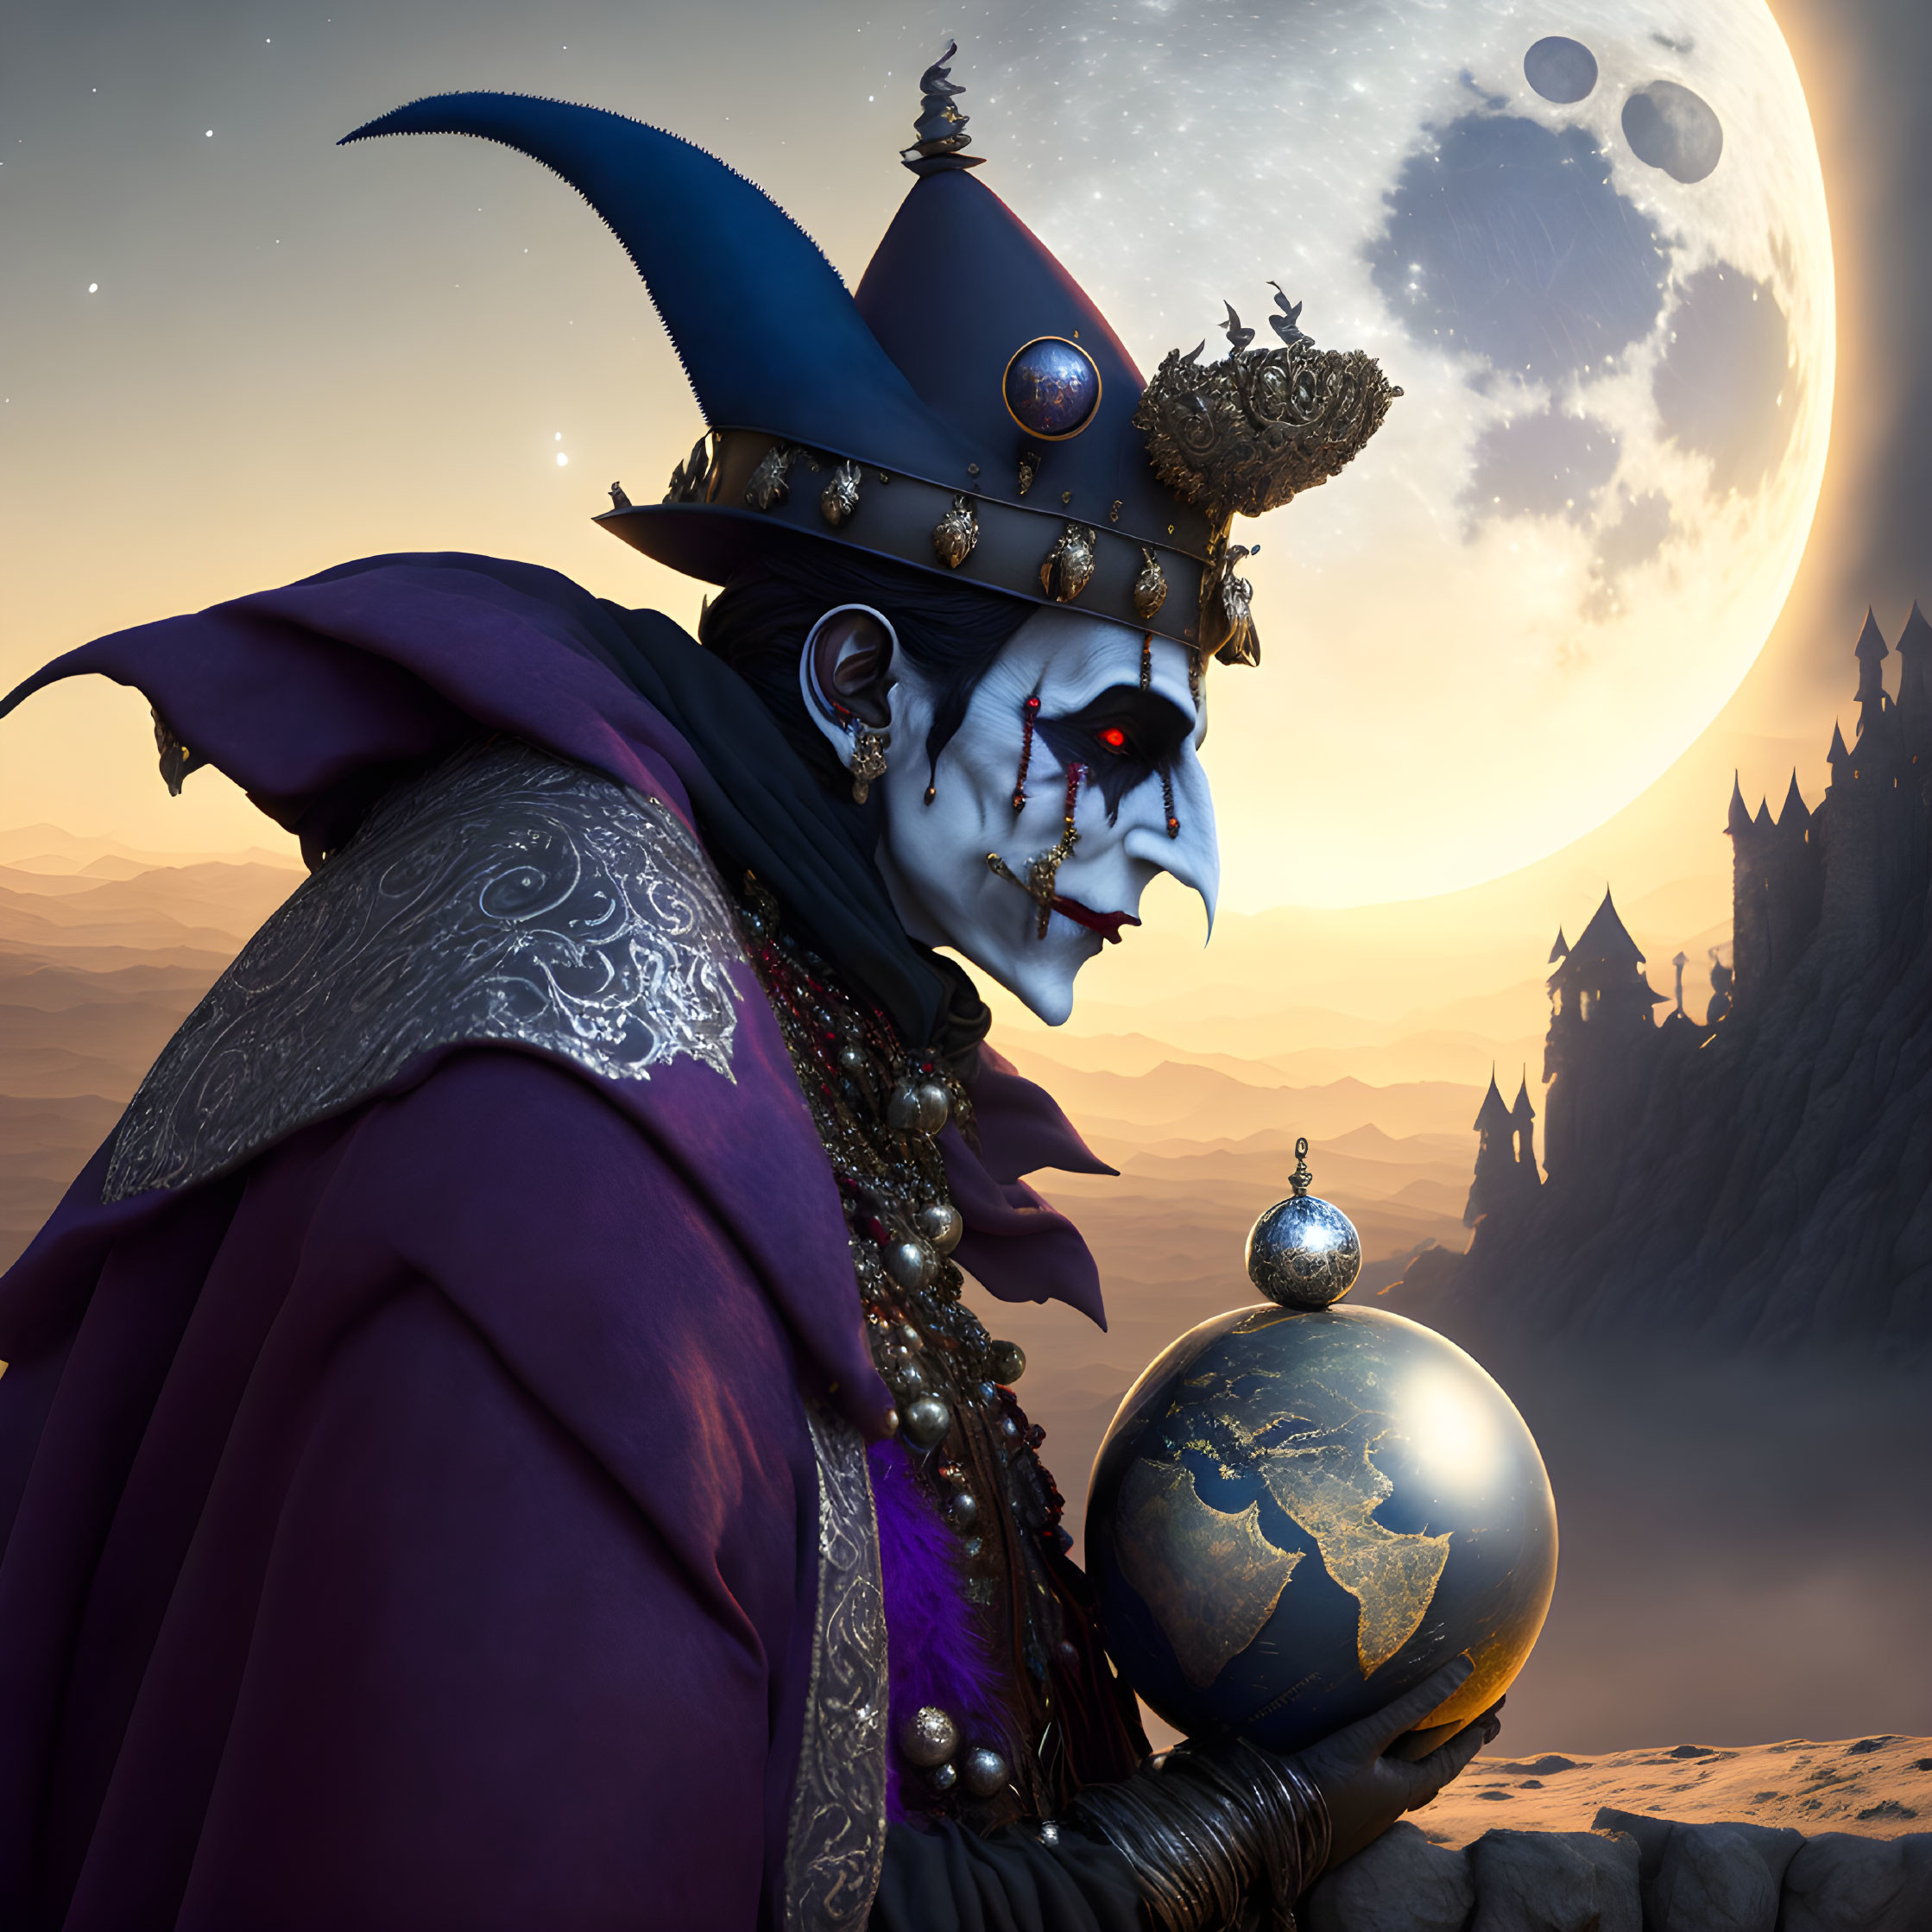 Regal figure with jester's hat holding a globe in twilight scene